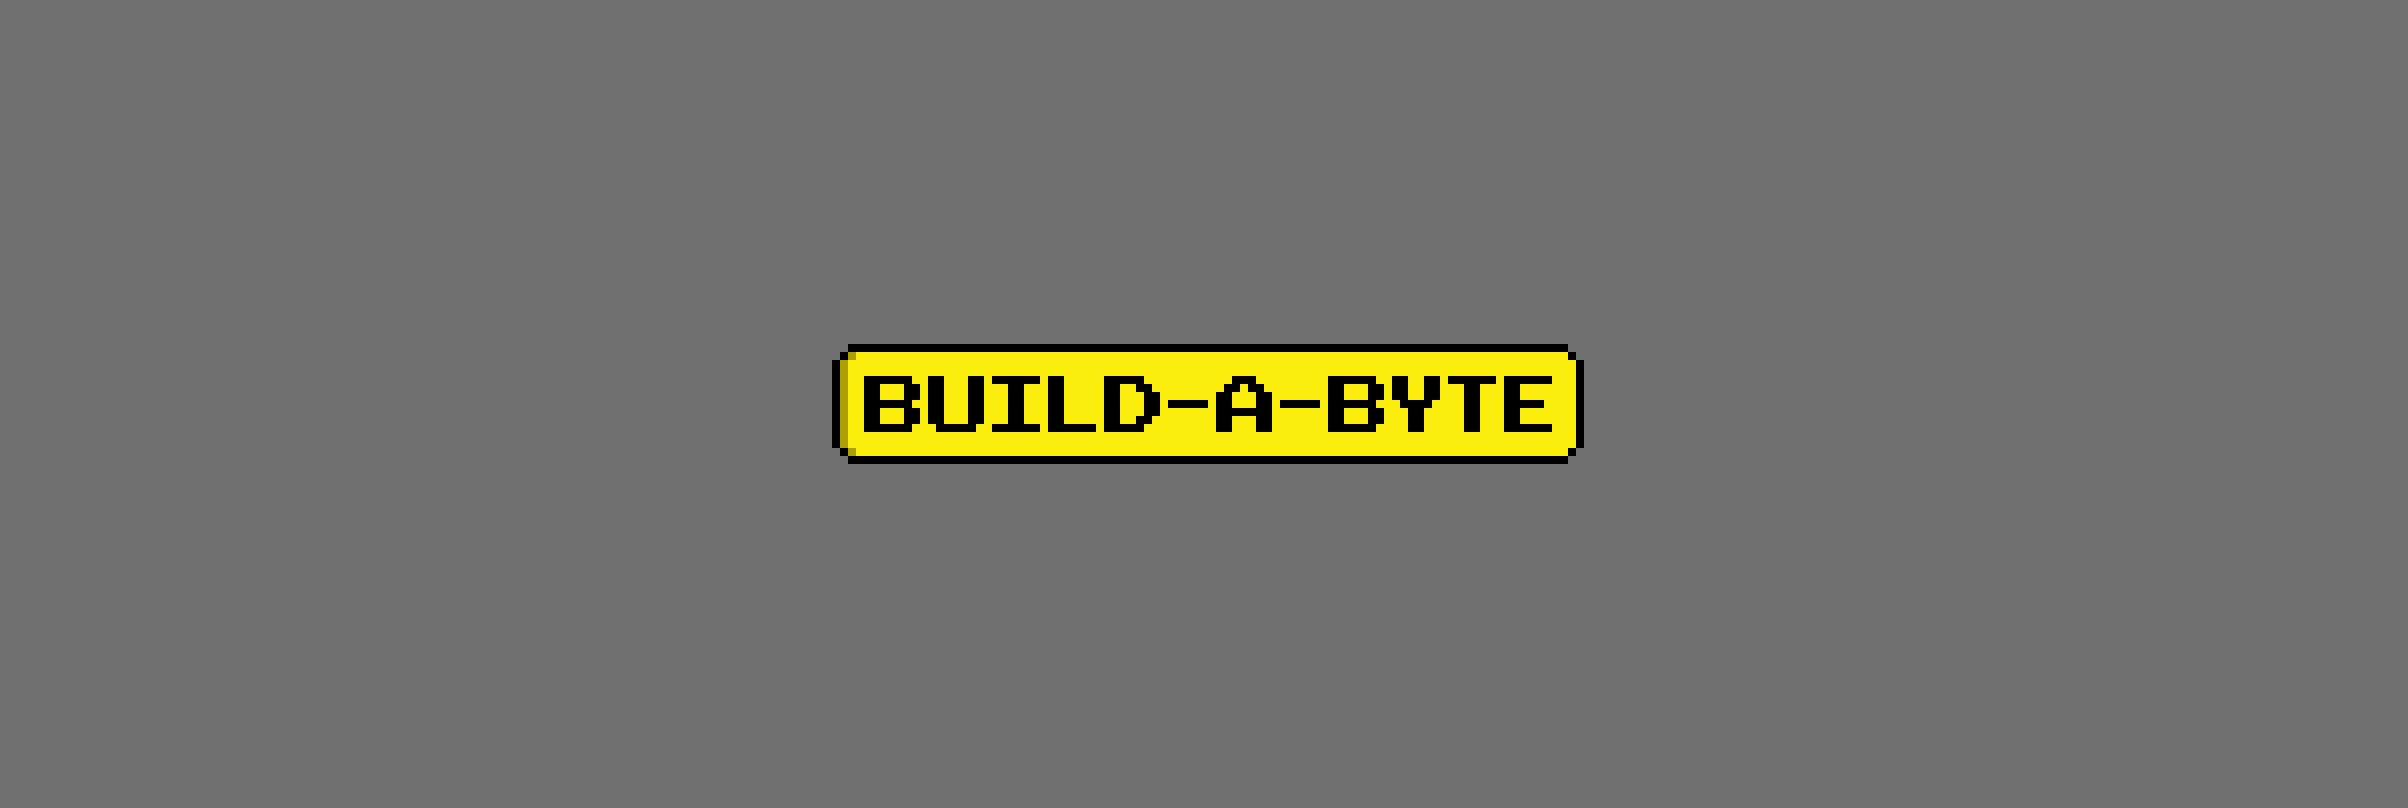 Build-A-Byte バナー